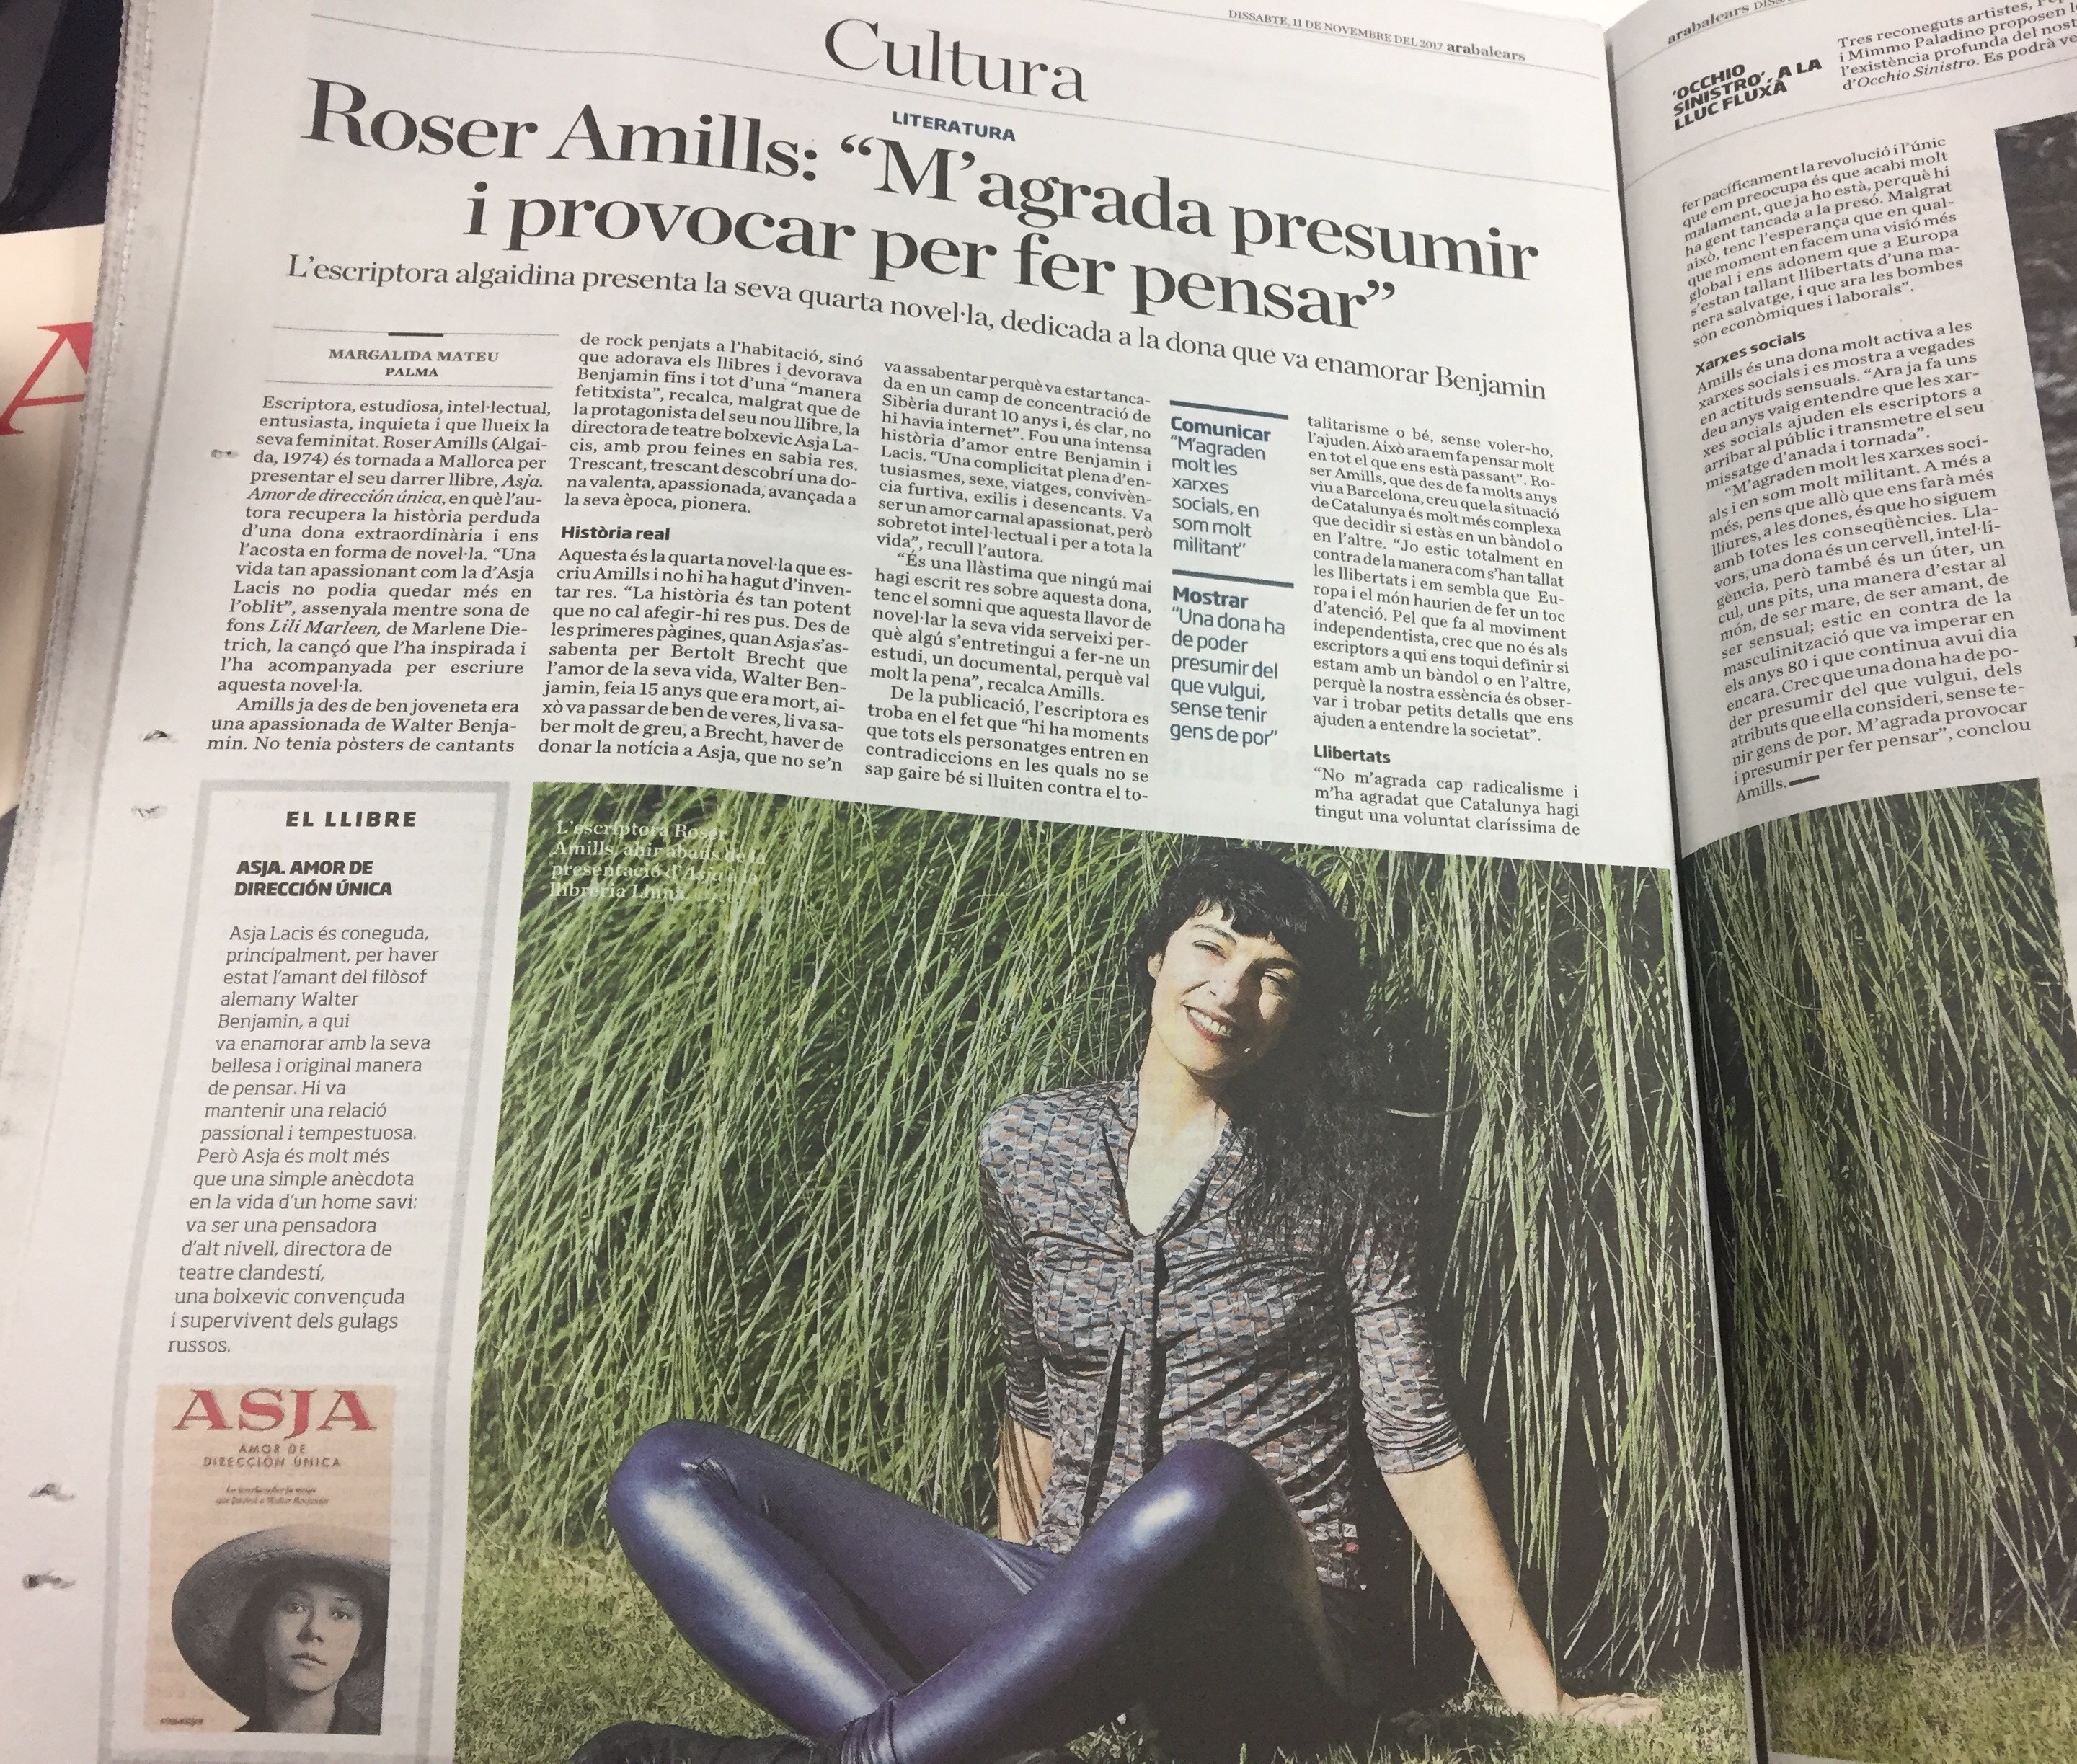 ARA Balears | entrevista a Roser Amills: “M’agrada presumir i provocar per fer pensar”